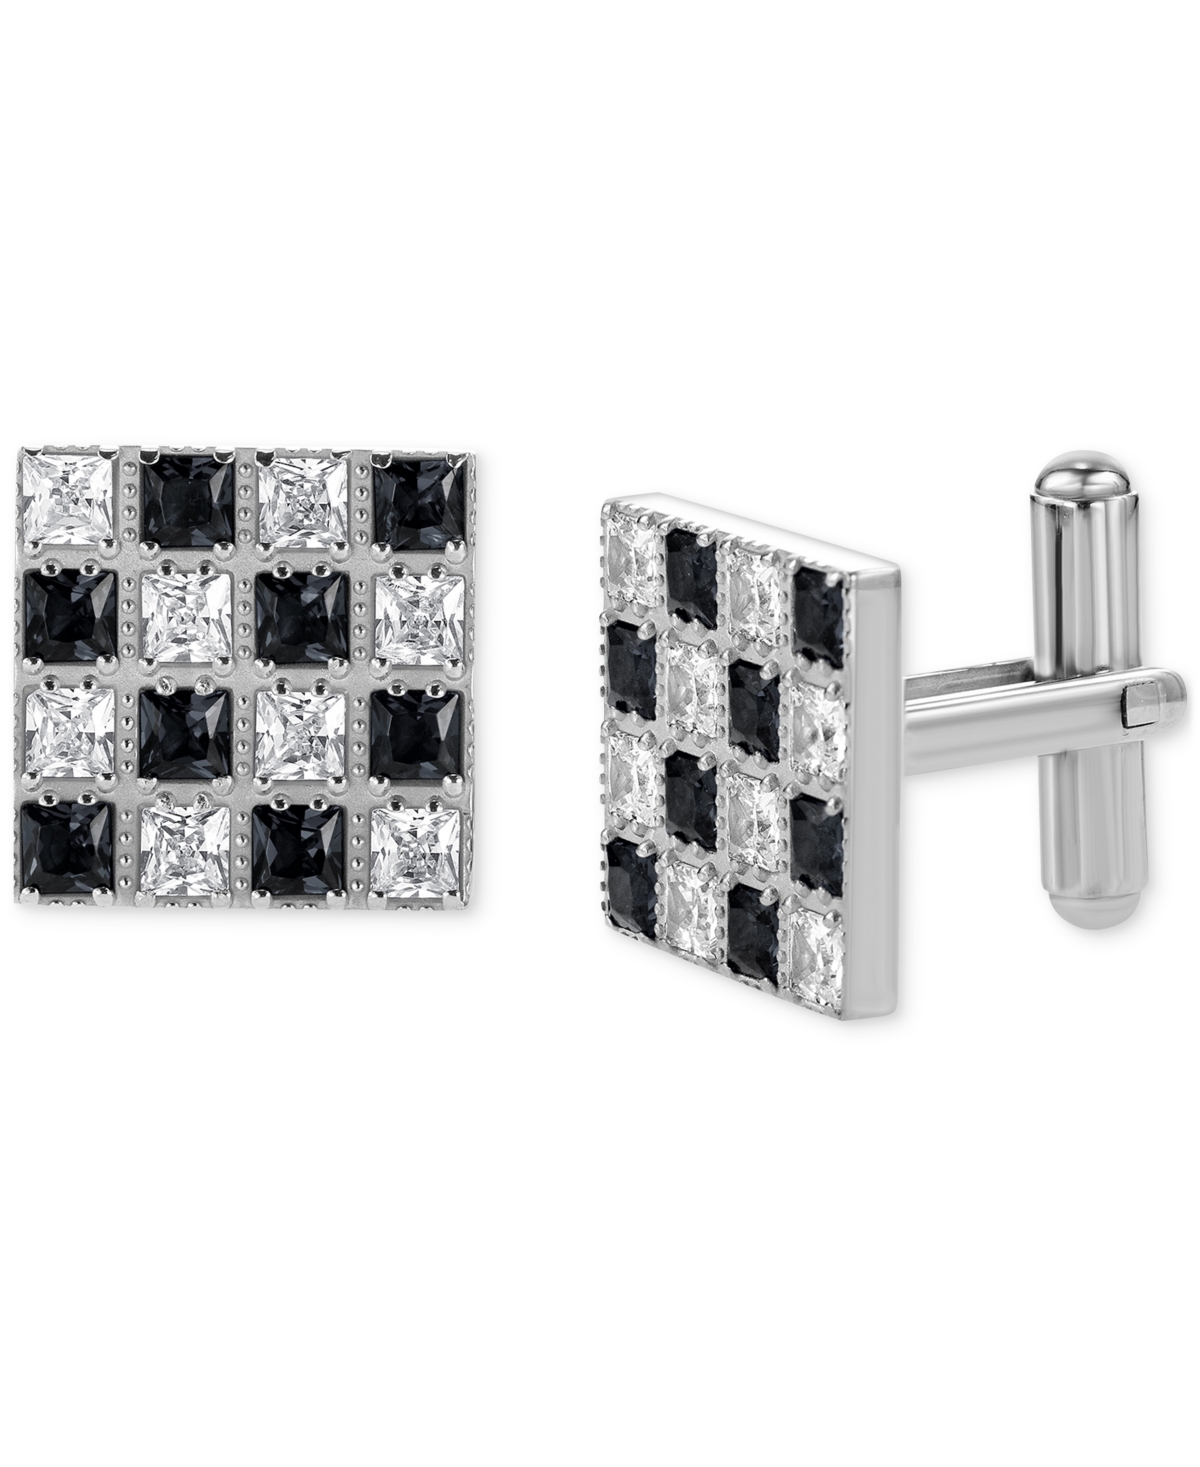 Men's Cubic Zirconia Checkerboard Square Cufflinks in Stainless Steel - Black